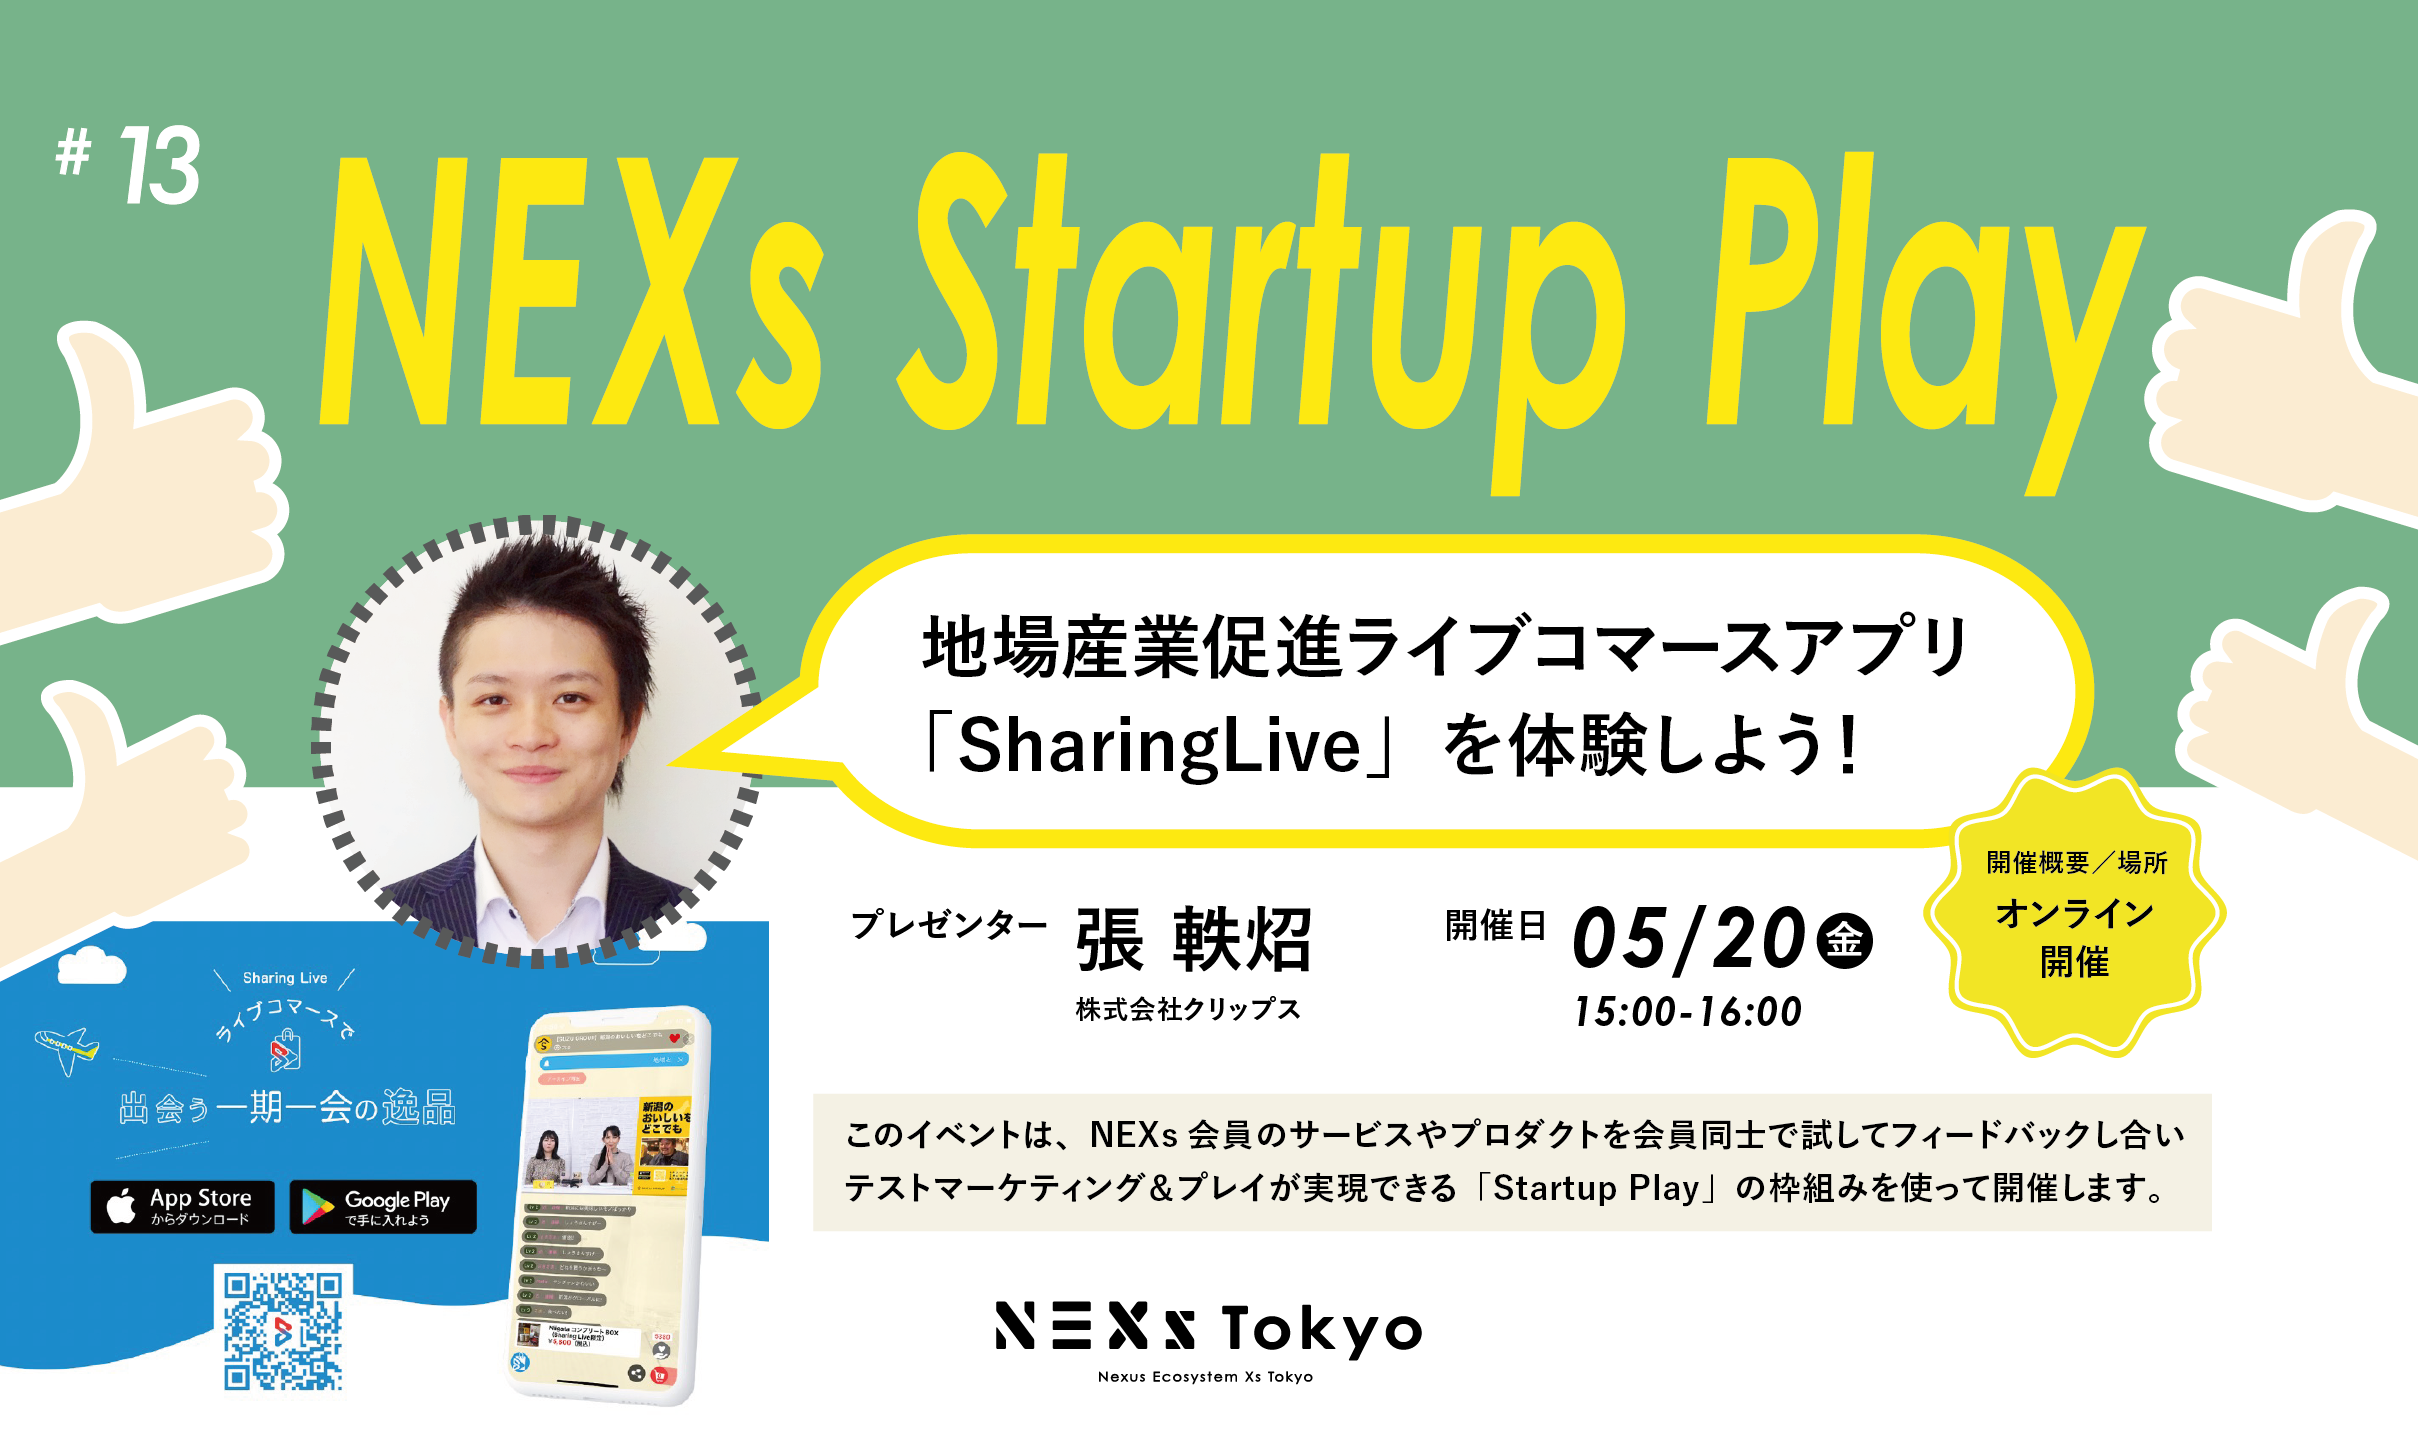 Startup Play! vol.13 地場産業促進ライブコマースアプリ「SharingLive」を体験しよう！